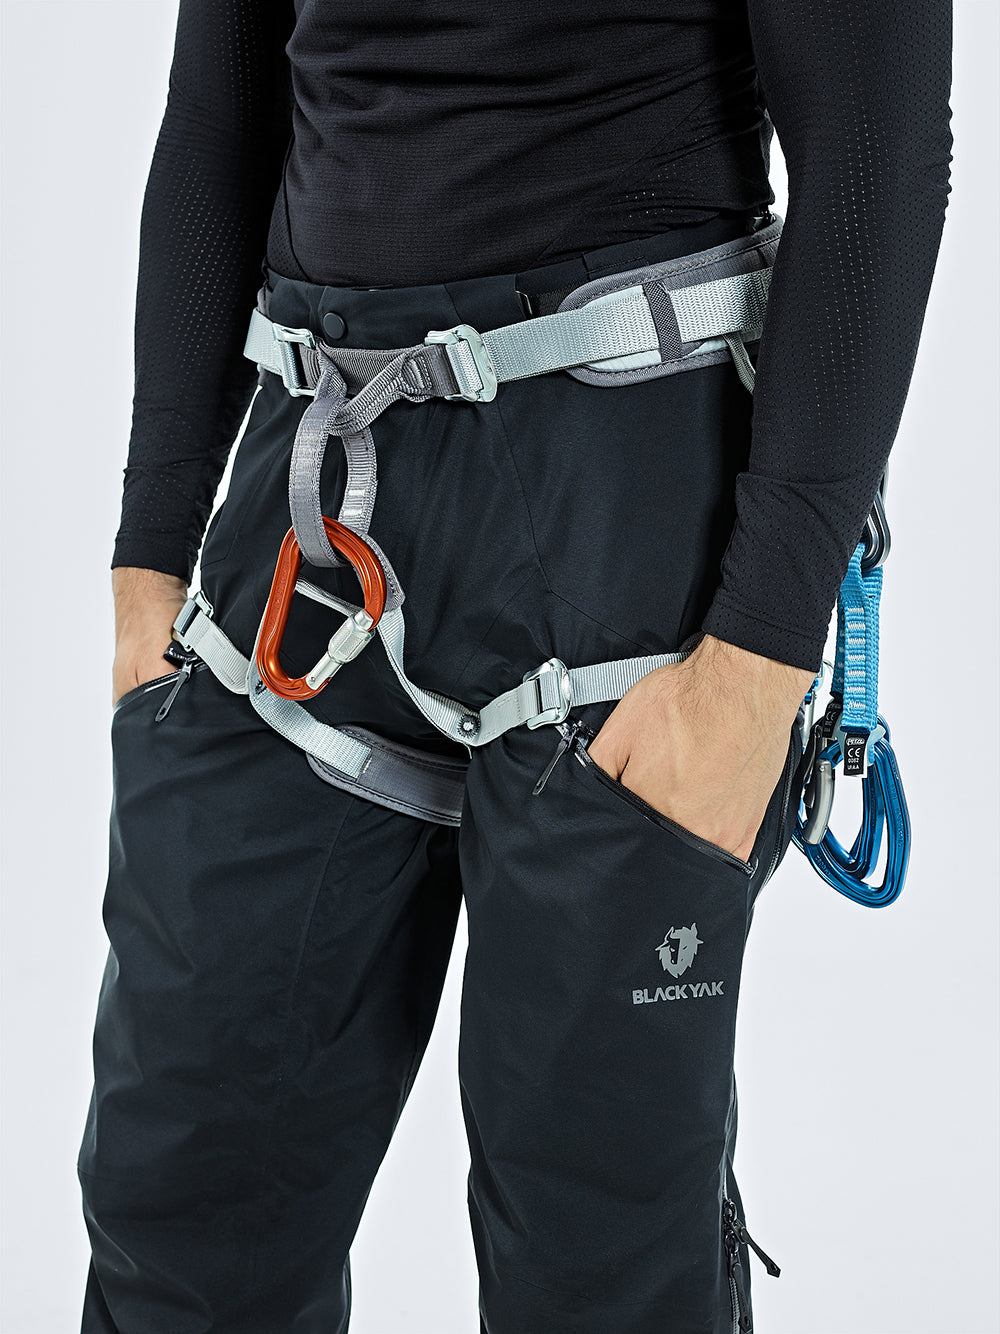 Black Yak Kuri Pants - Ski trousers Women's | Product Review |  Bergfreunde.eu